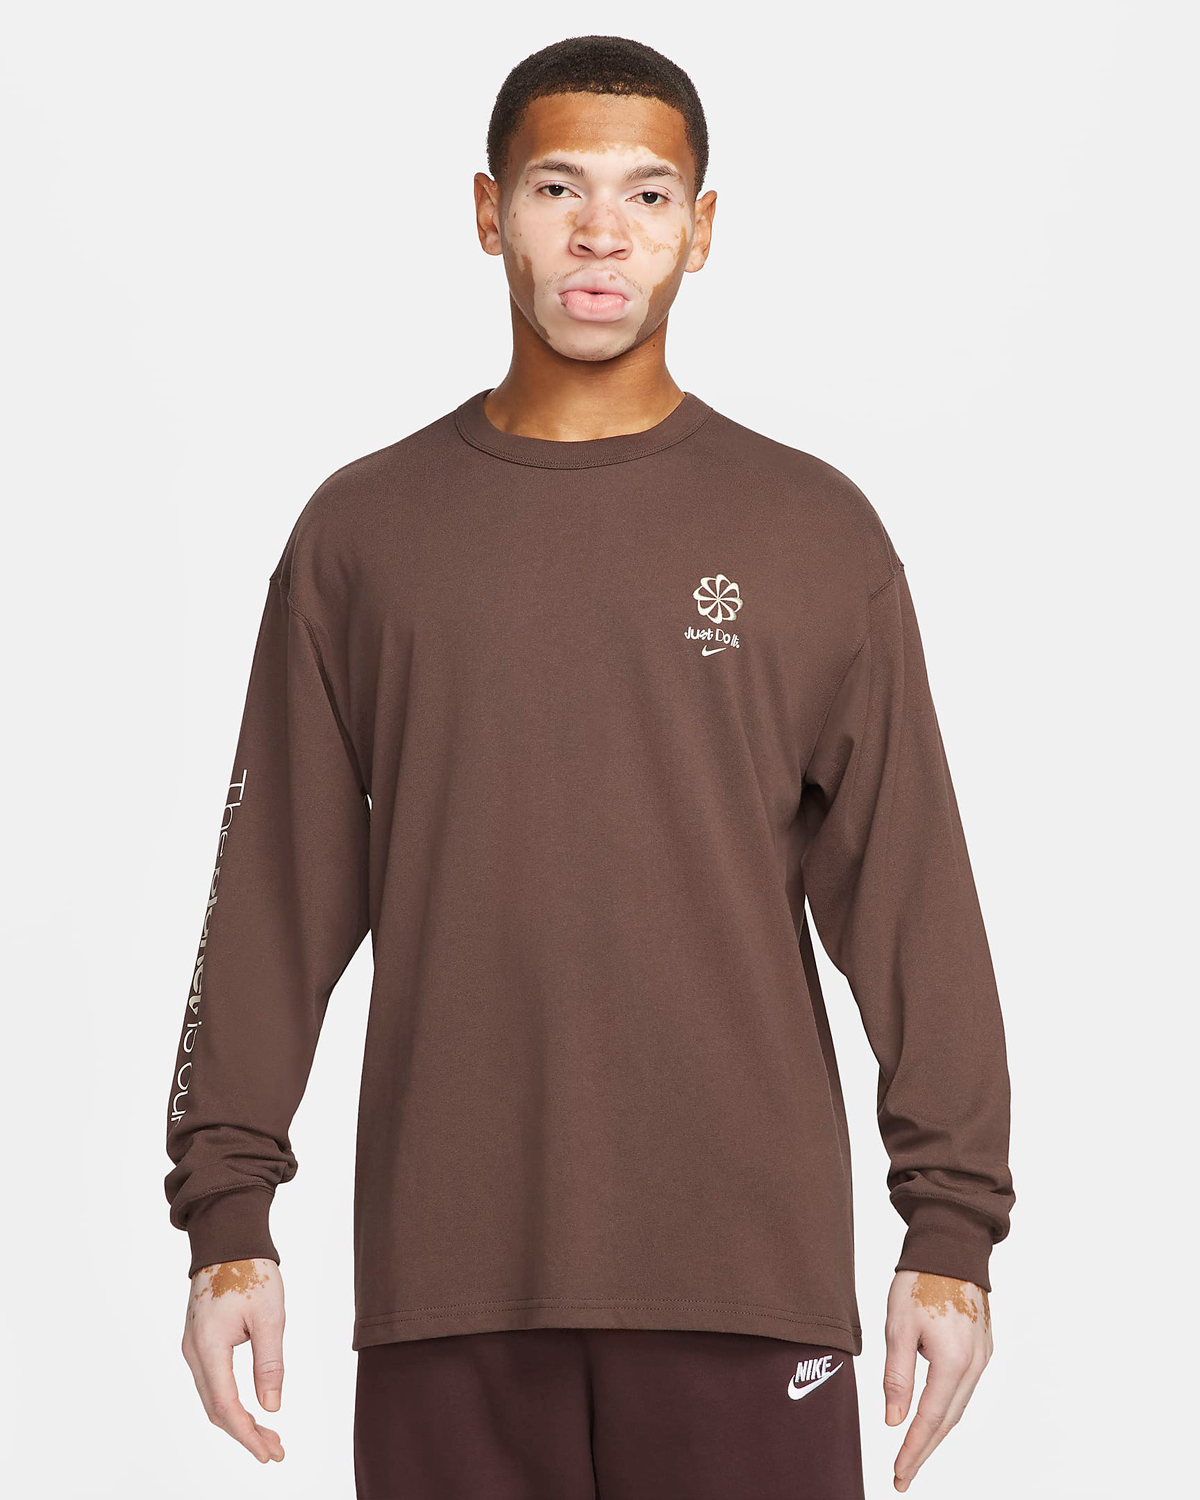 Nike-Sportswear-Long-Sleeve-T-Shirt-Baroque-Brown-1